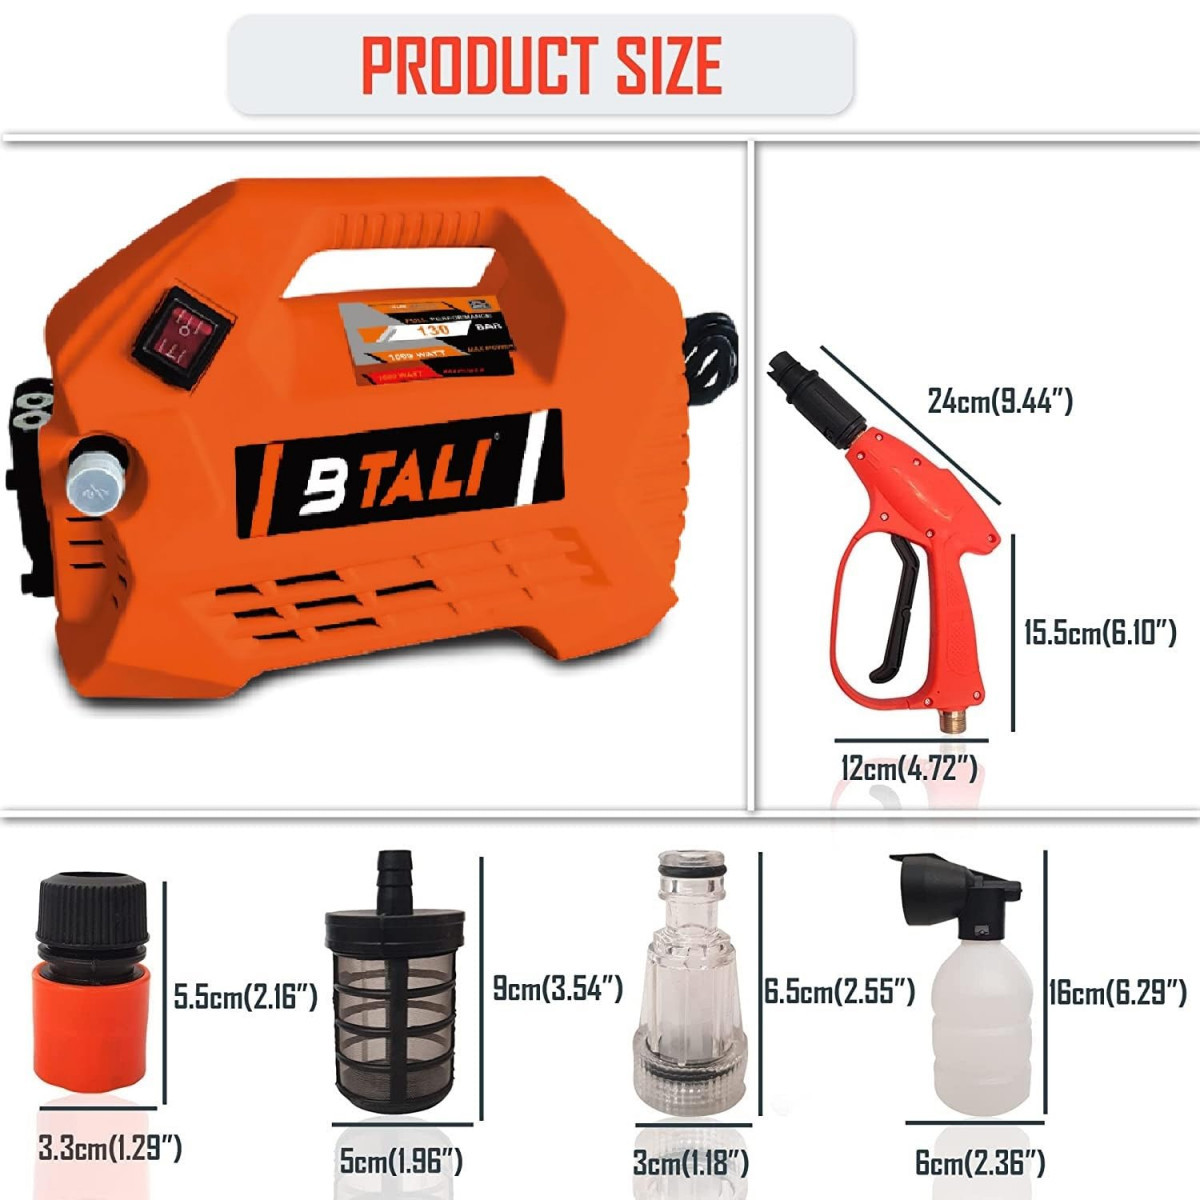 BTALI High Pressure Washer 1600 Watt 130 Bar with Hydraulic Outlet Hose and Heavy Gun Pressure Washer